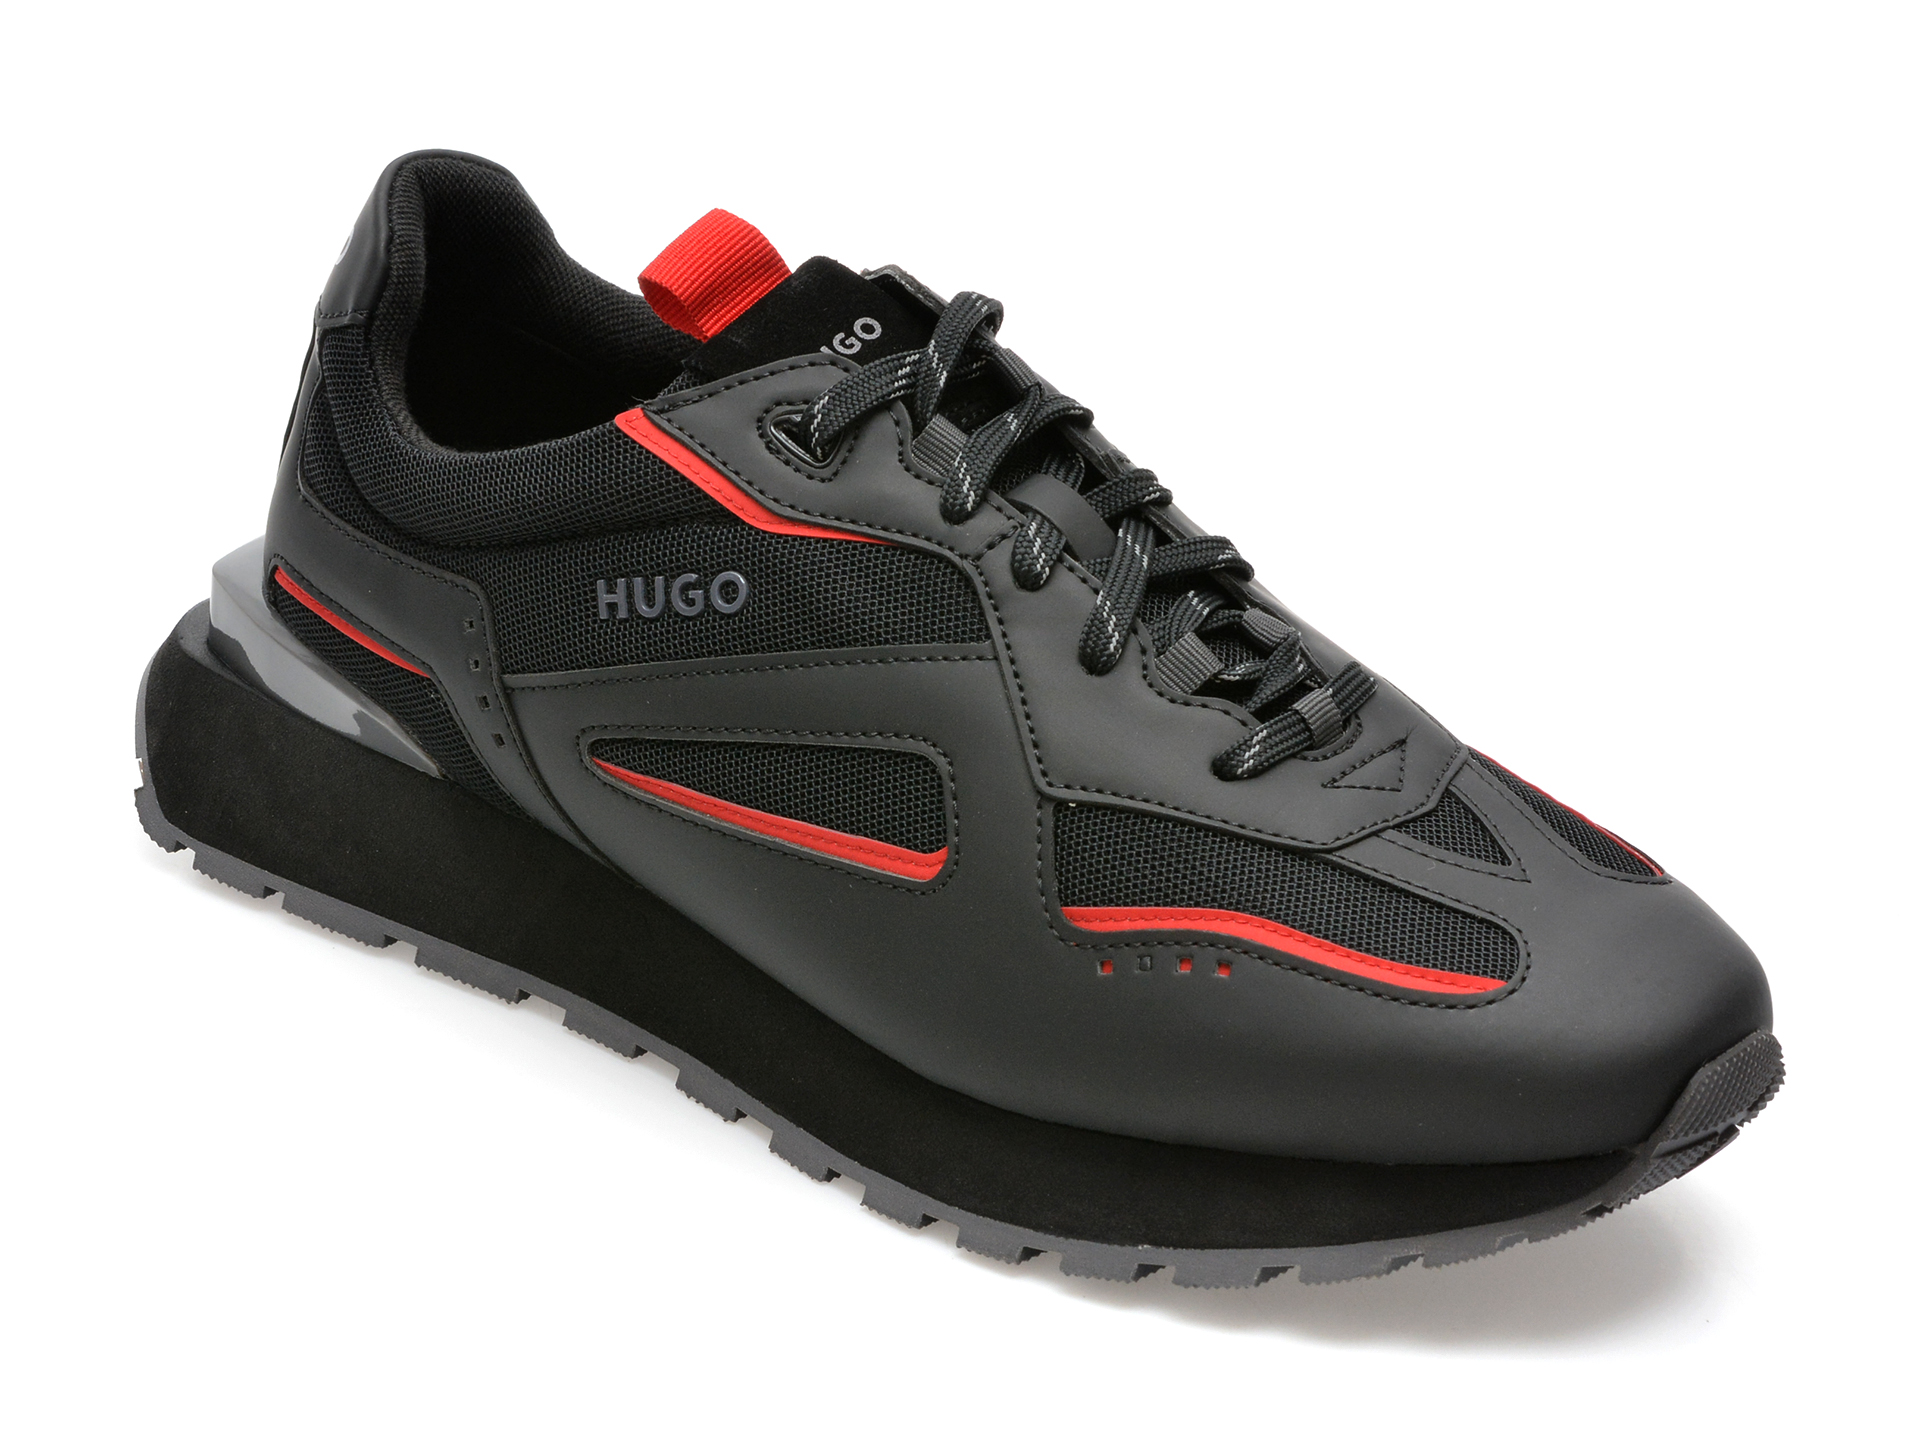 Pantofi sport HUGO BOSS negri, 463, din material textil si piele ecologica barbati 2023-03-21